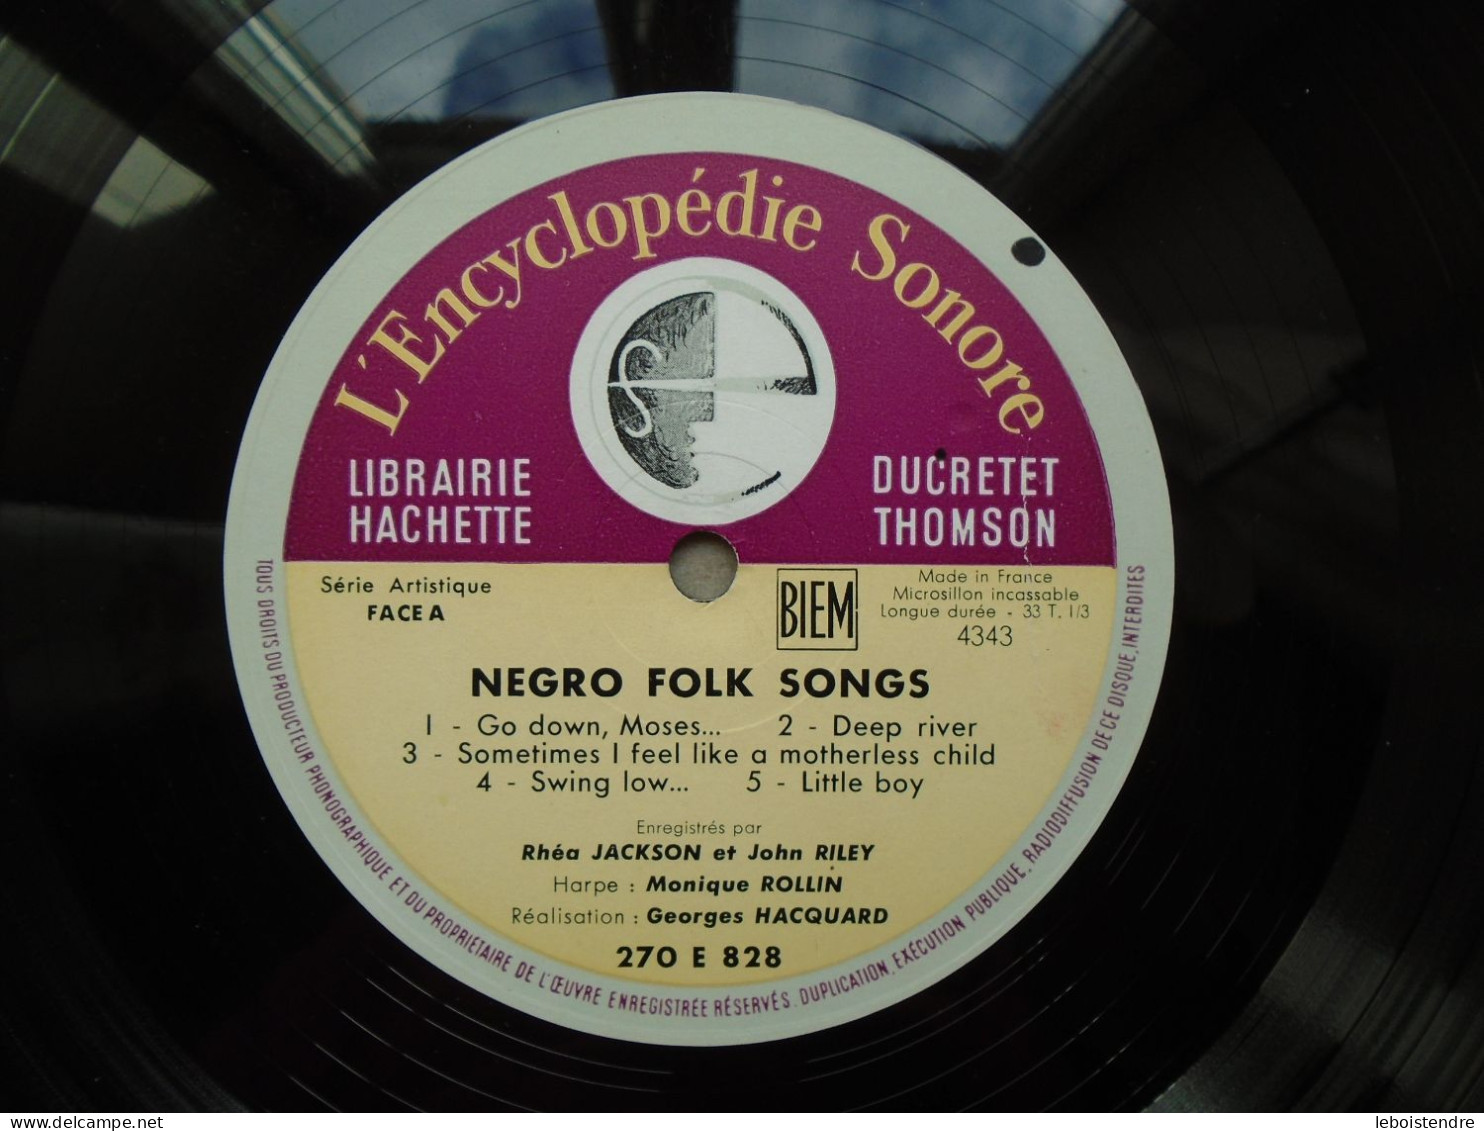 10" VINYLE NEGRO FOLK SONGS 270E828 + LIVRET L ENCYCLOPEDIE SONORE LIBRAIRIE HACHETTE RHEA JACKSON JOHN RILEY - Special Formats